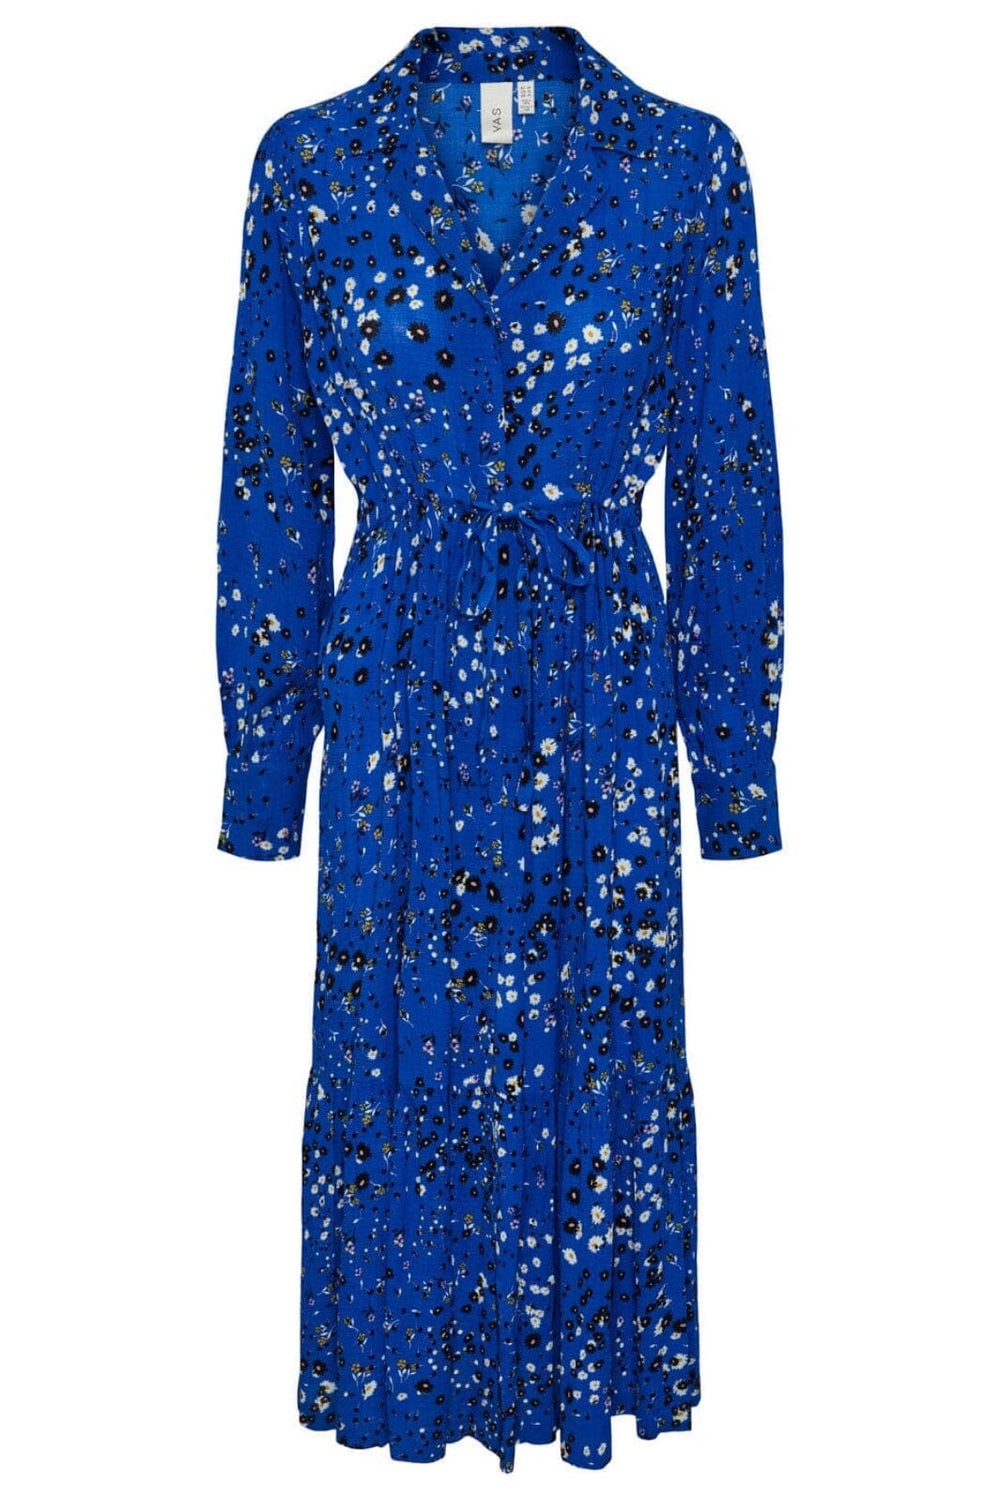 Y.A.S - Yasminny Ls Long Shirt Dress S. - Blue Iolite Minny print Kjoler 